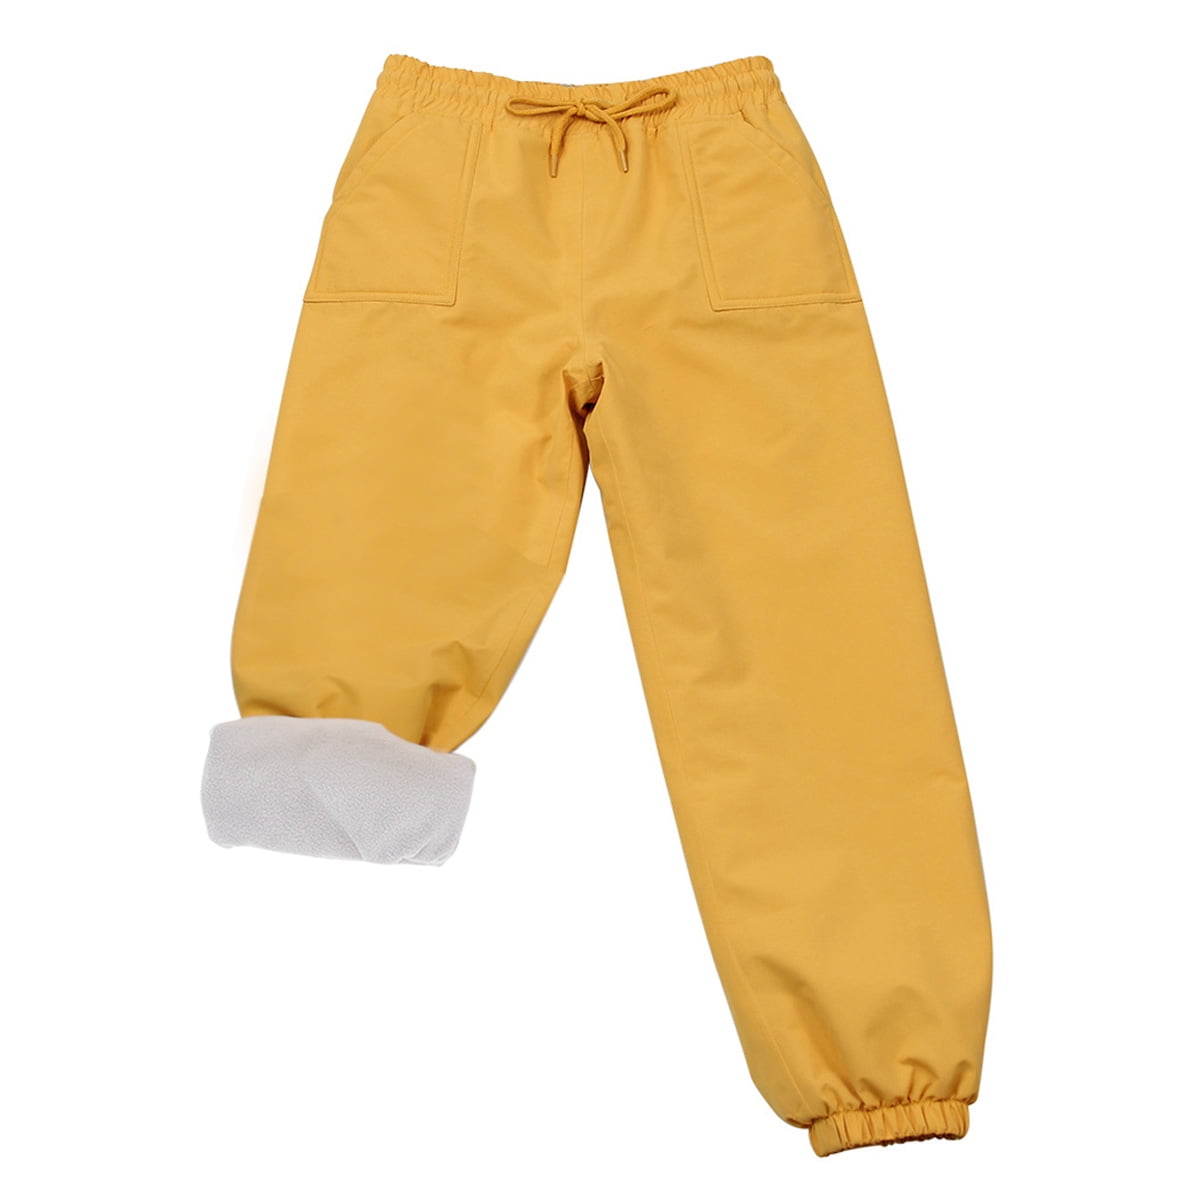 CAMLAKEE Kids Waterproof Trousers Unisex Fleece Lined Winter Skiing Pants 